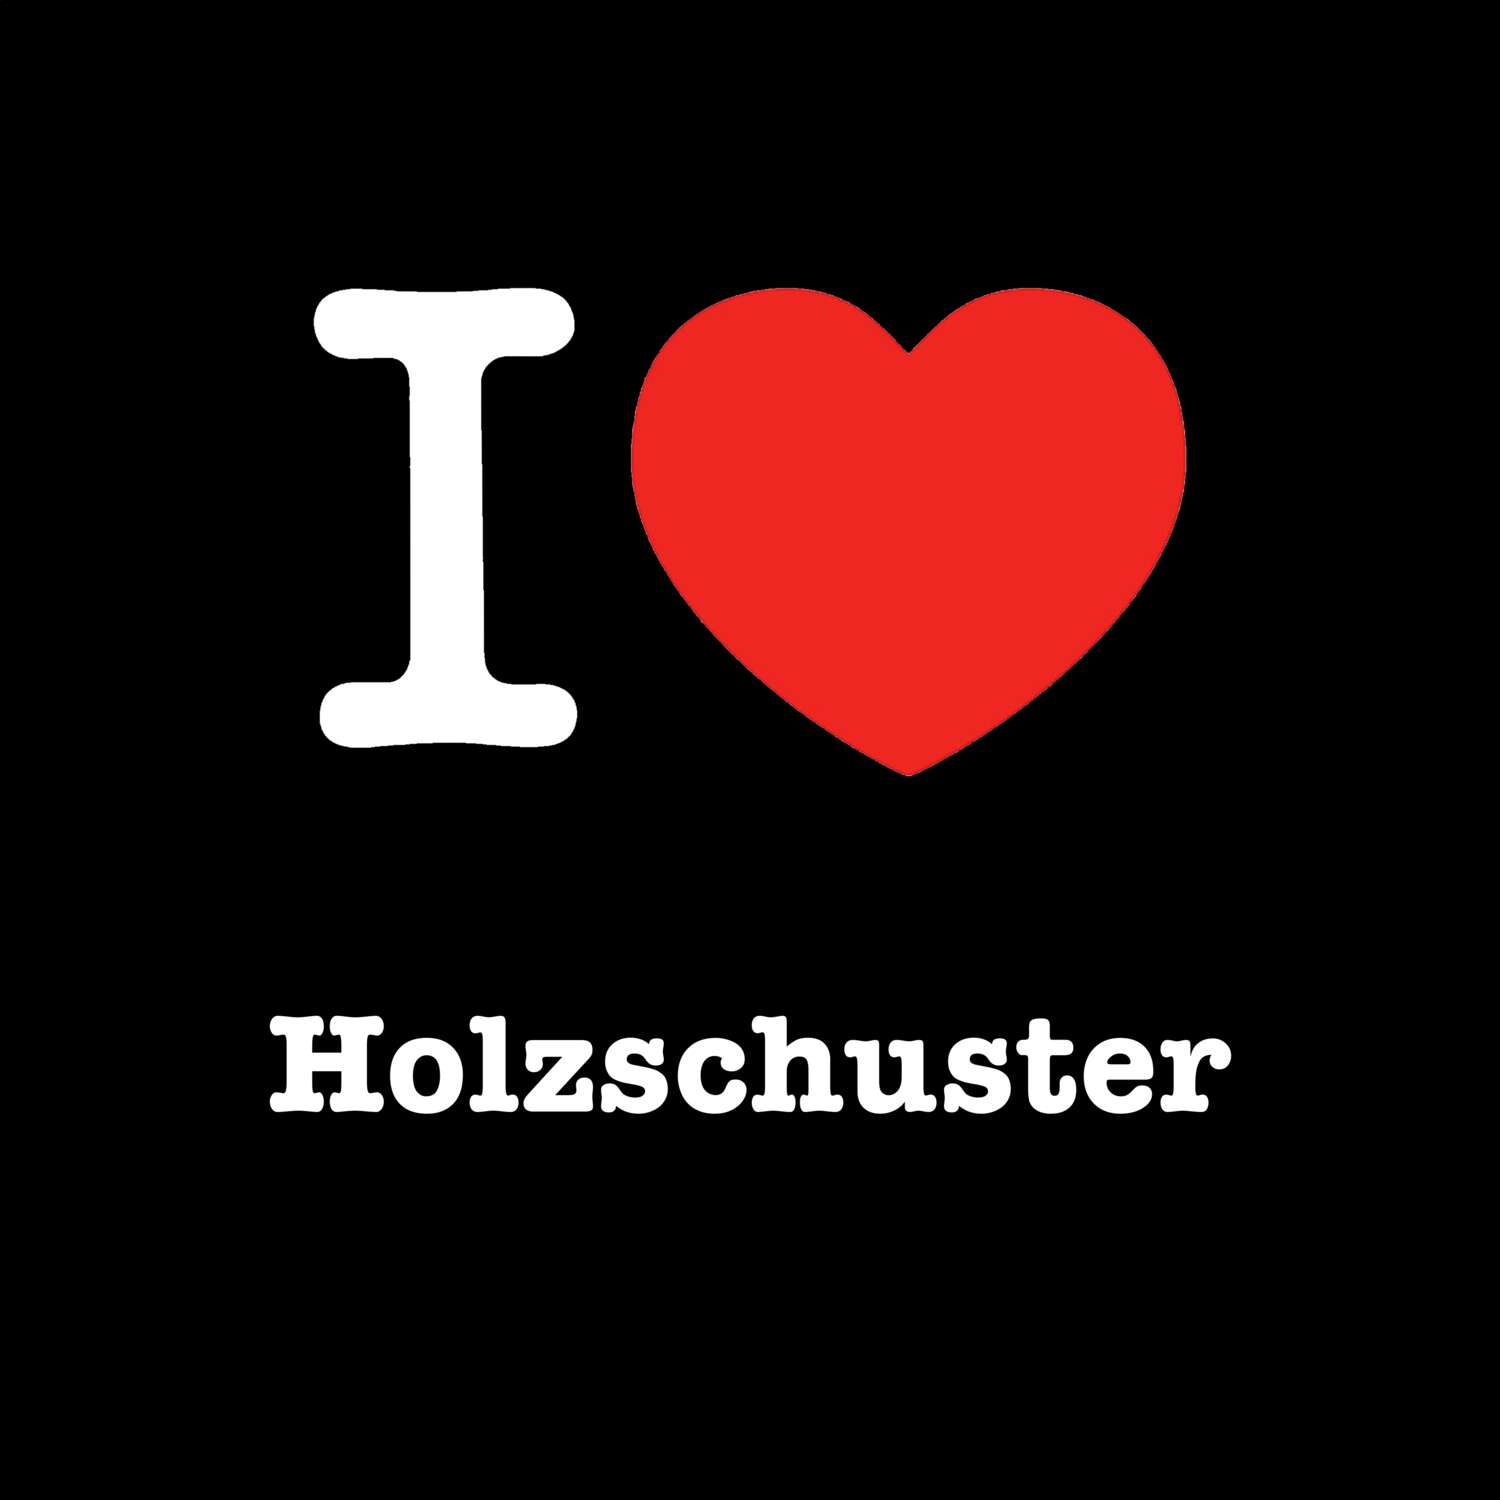 Holzschuster T-Shirt »I love«